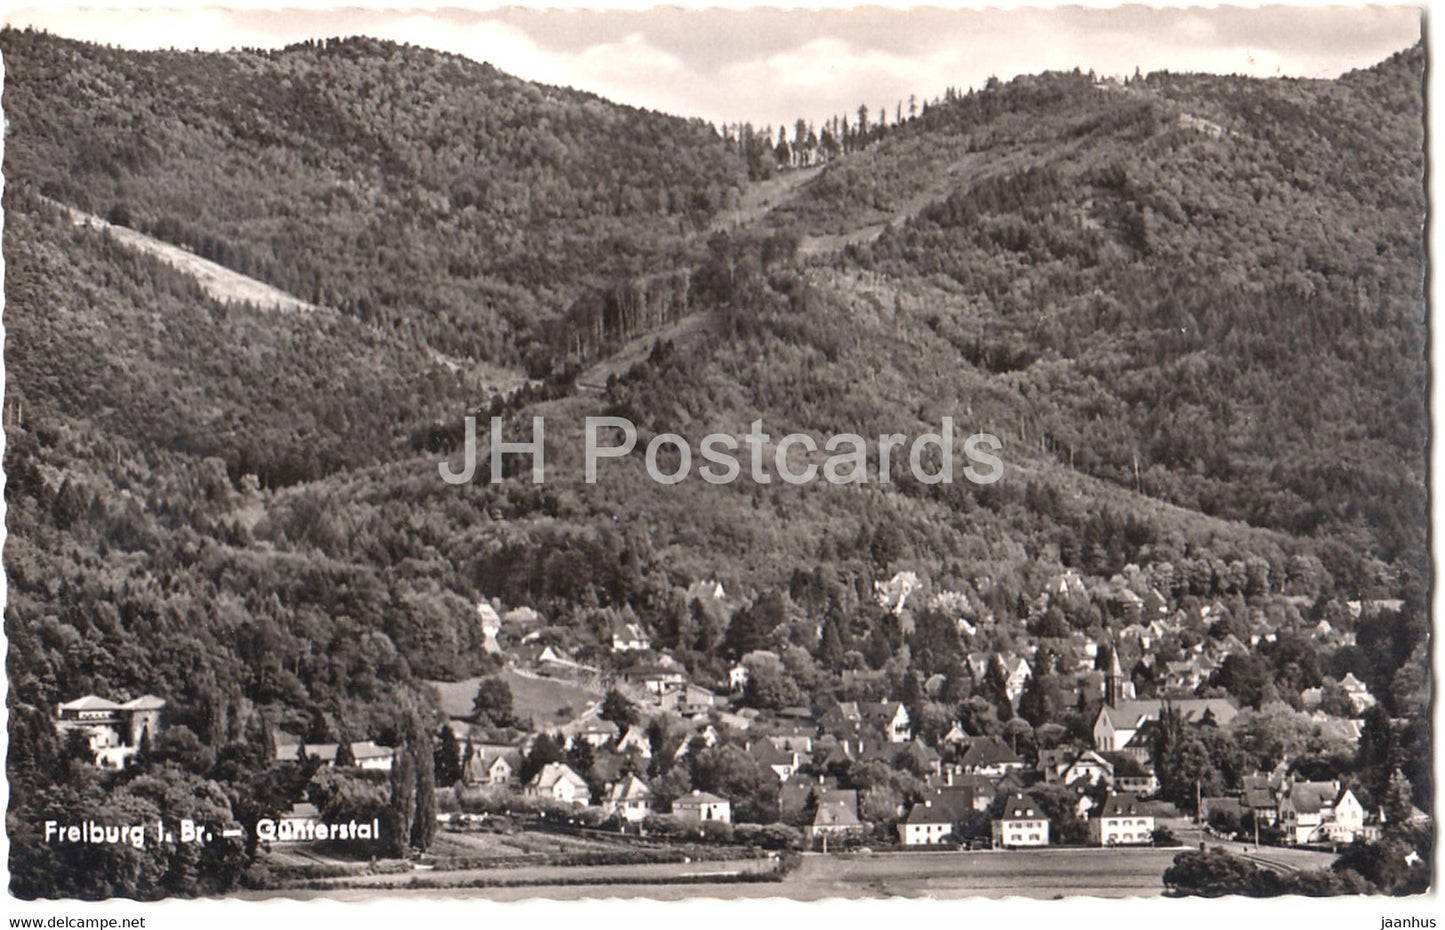 Freiburg i Br - Gunterstal - Germany - unused - JH Postcards